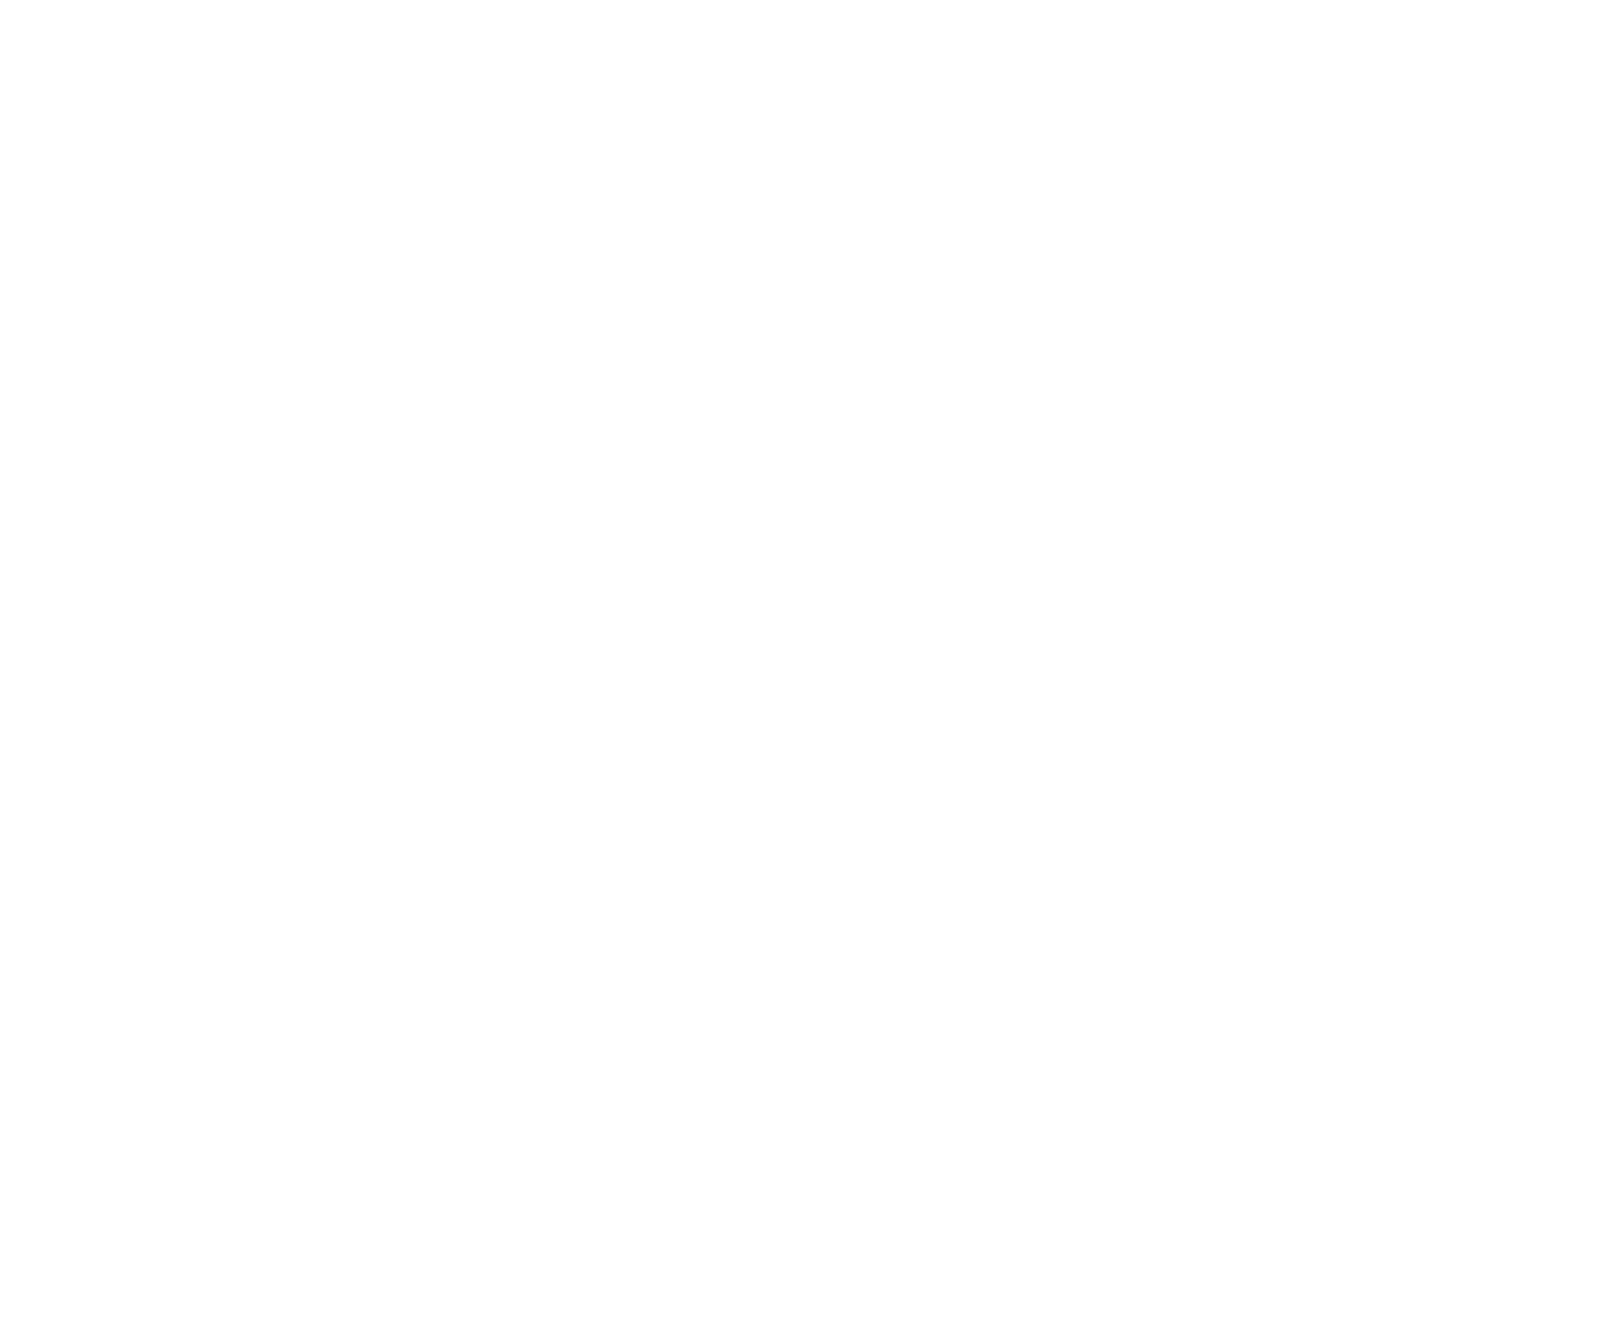 NIU logo for dark backgrounds (transparent PNG)